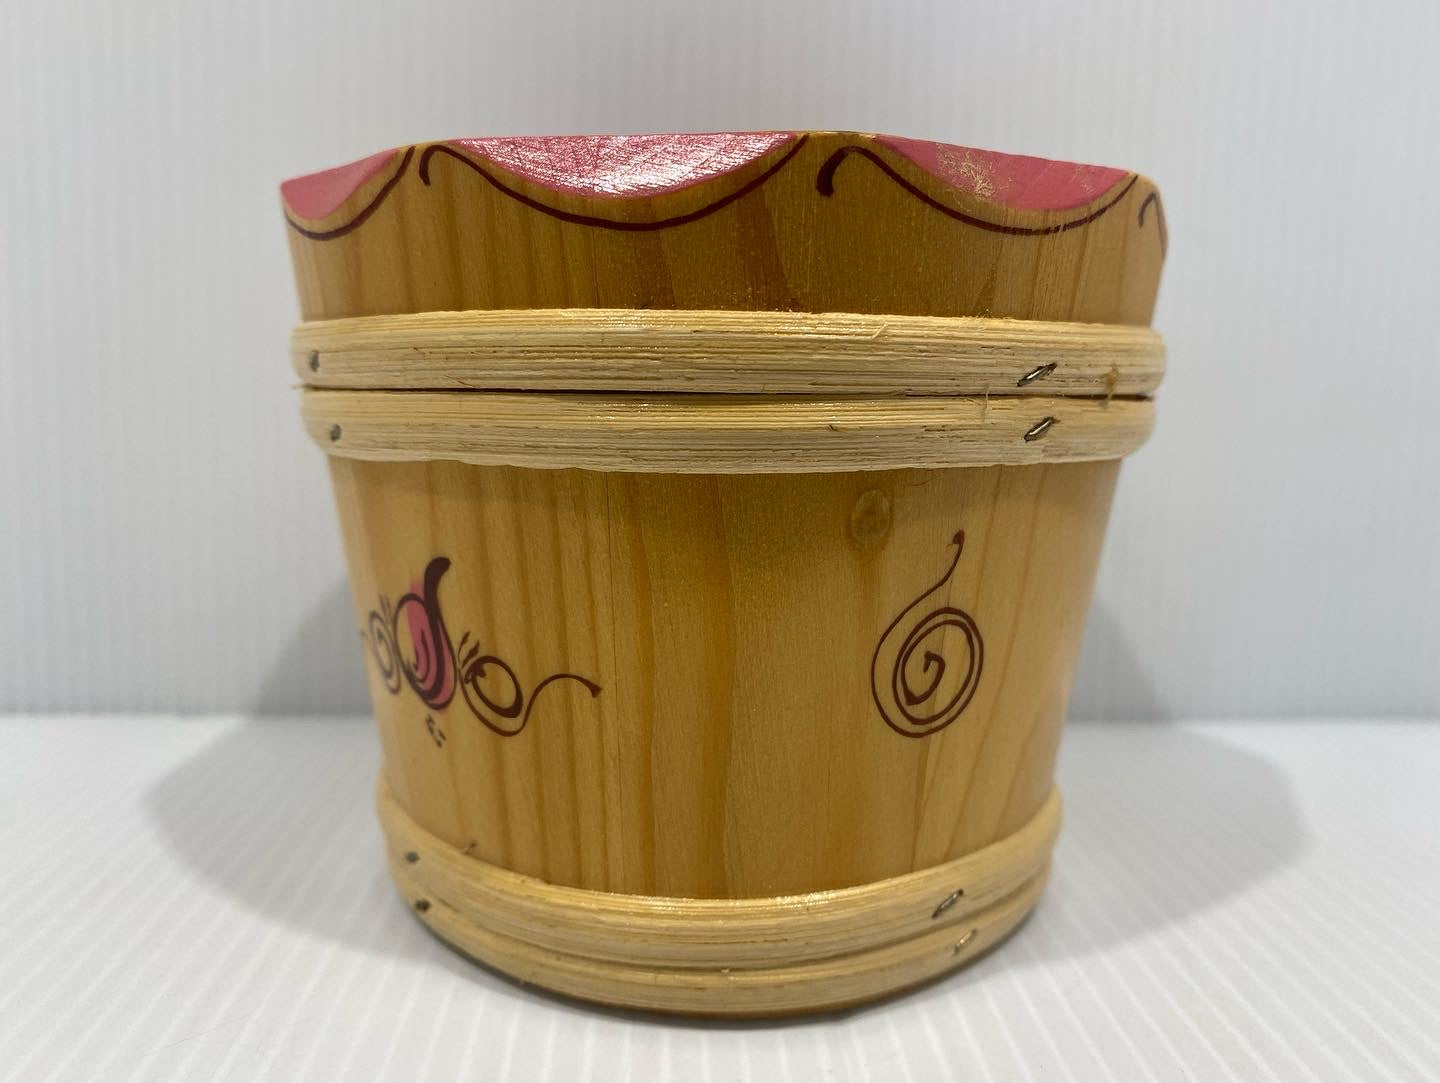 Antique Rustic Wood Bucket, handpainted in traditional Swiss Alpine folk art